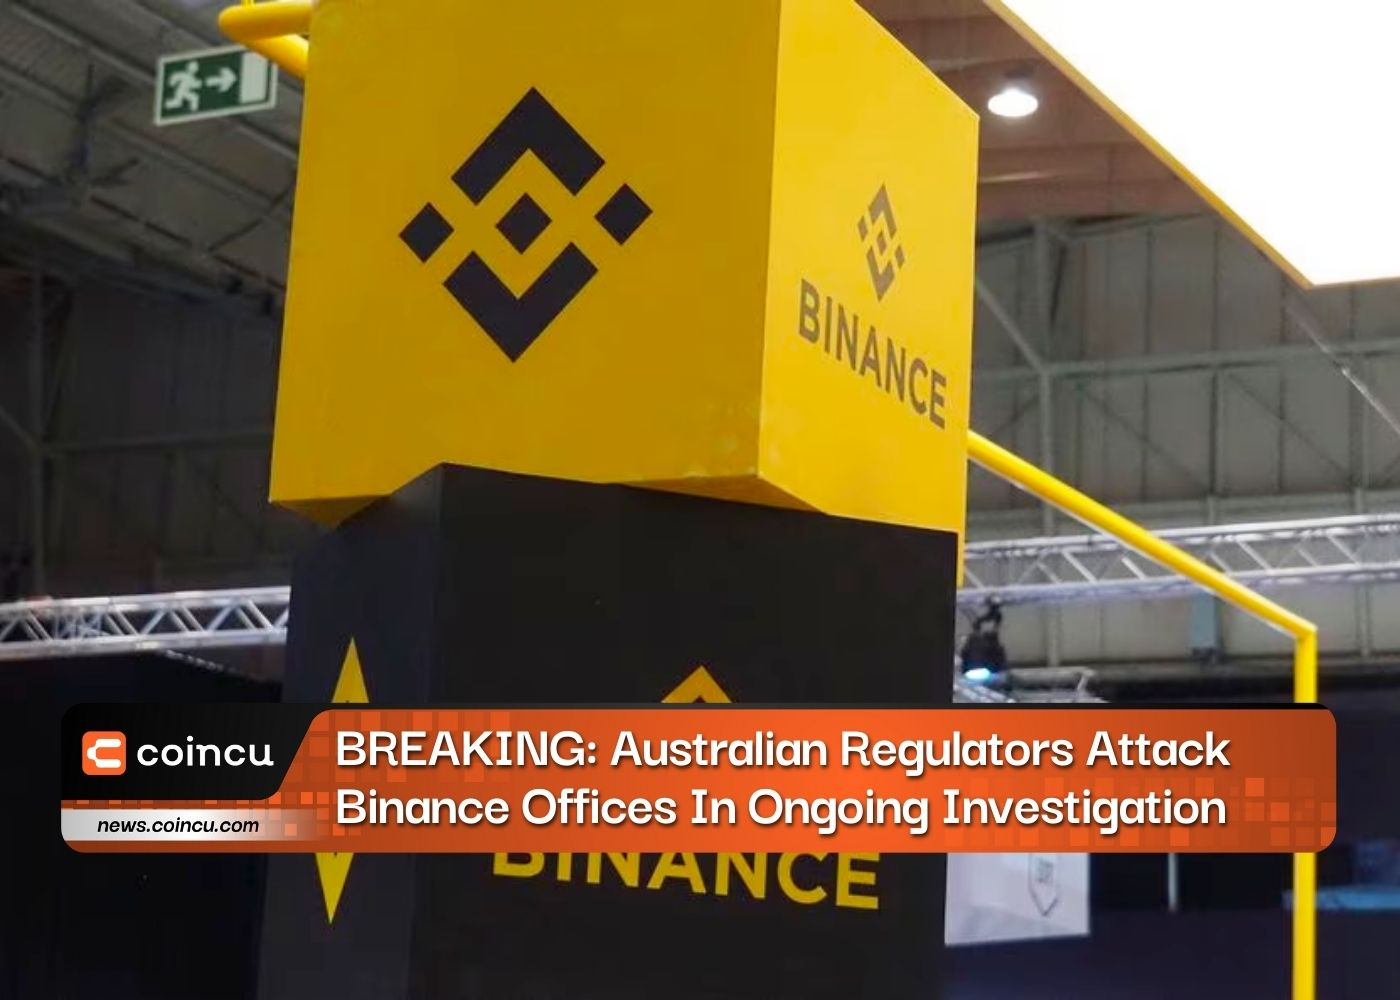 BREAKING: Australian Regulators Attack Binance Offices In Ongoing Investigation